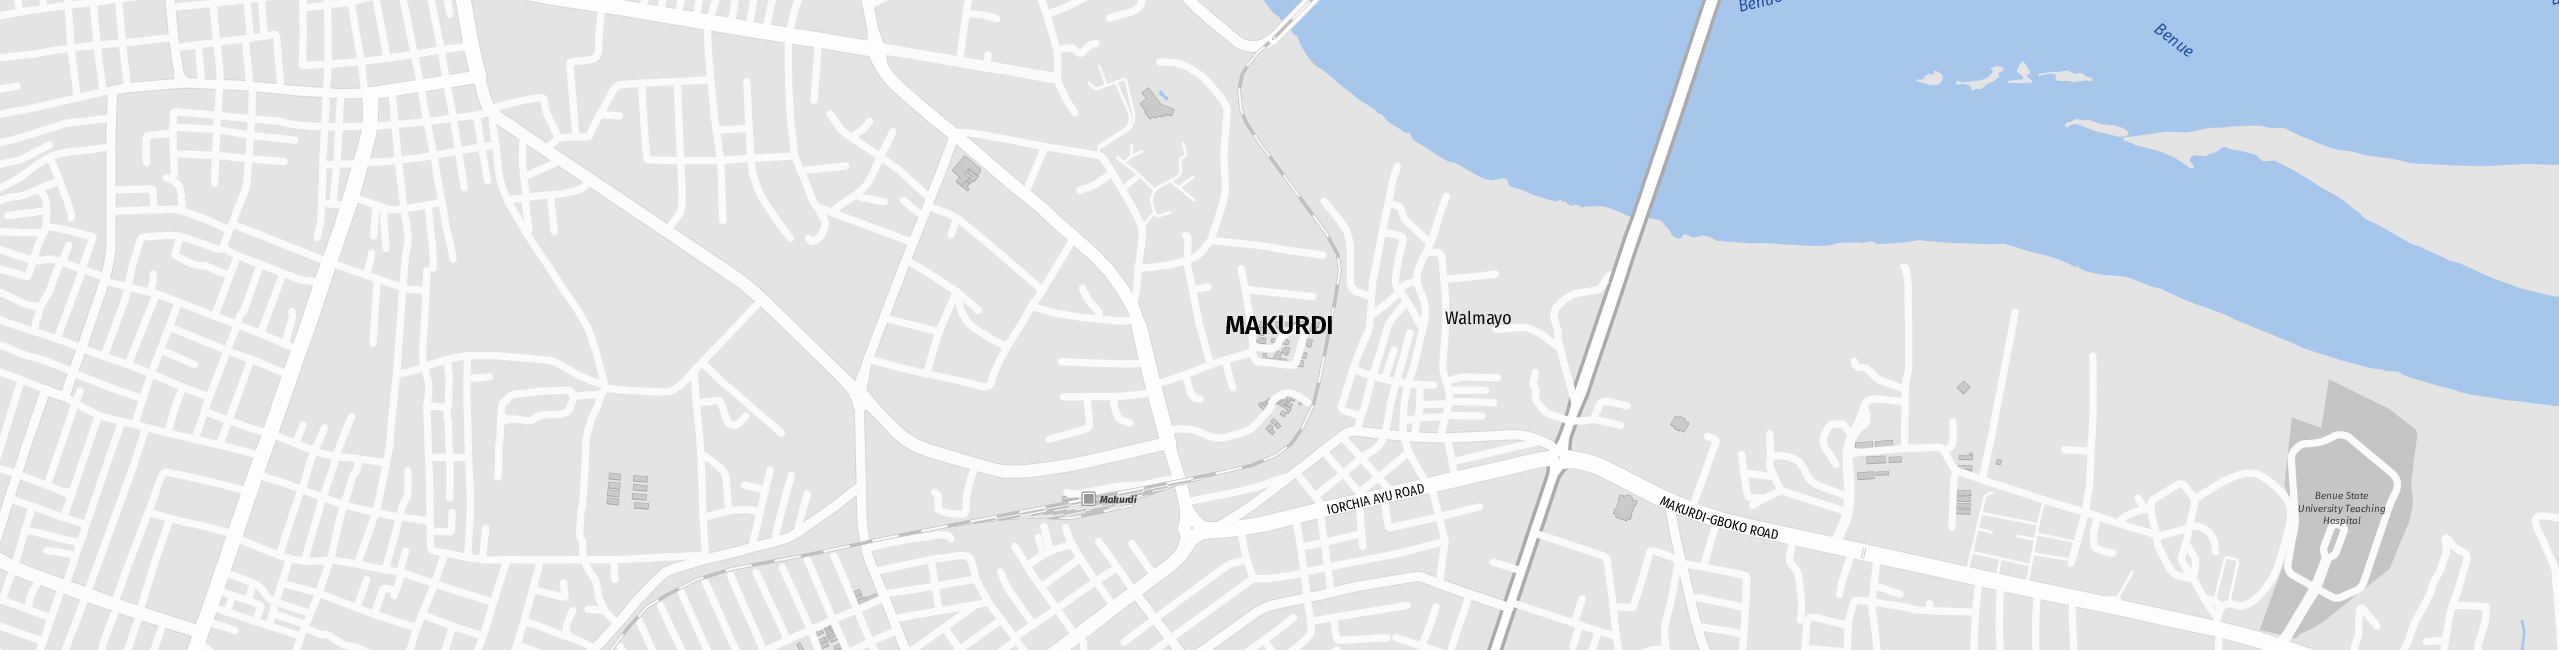 Stadtplan Makurdi zum Downloaden.